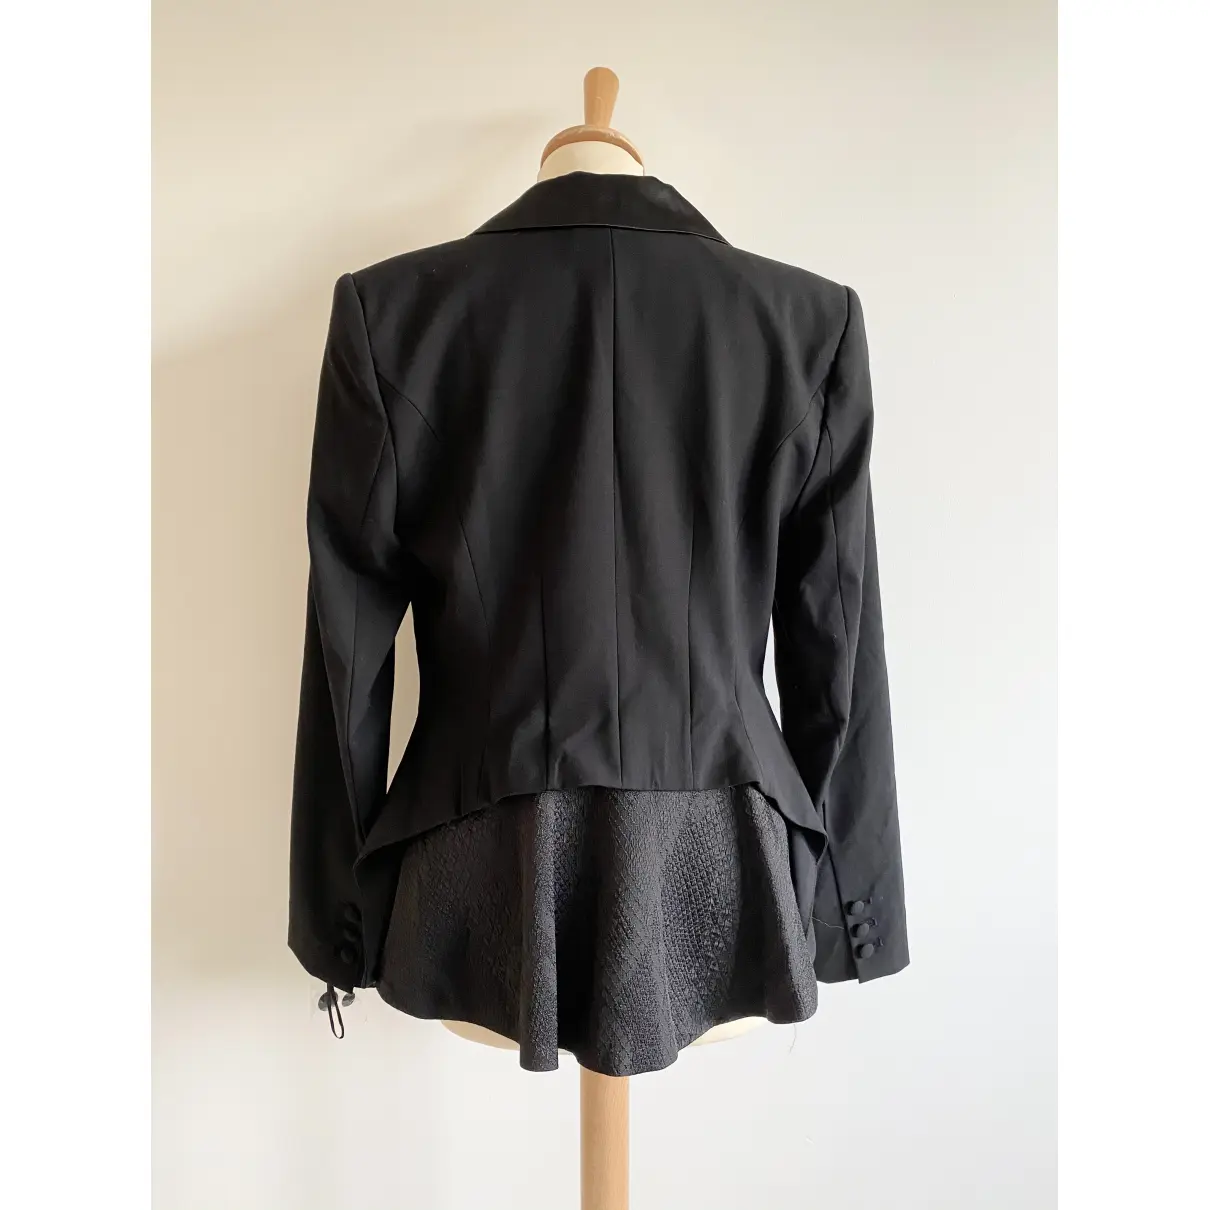 Buy Altuzarra Black Synthetic Jacket online